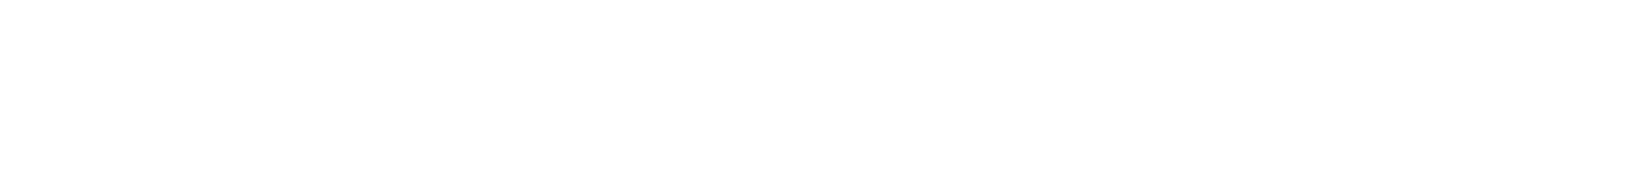 Pearl Abyss Logo groß für dunkle Hintergründe (transparentes PNG)